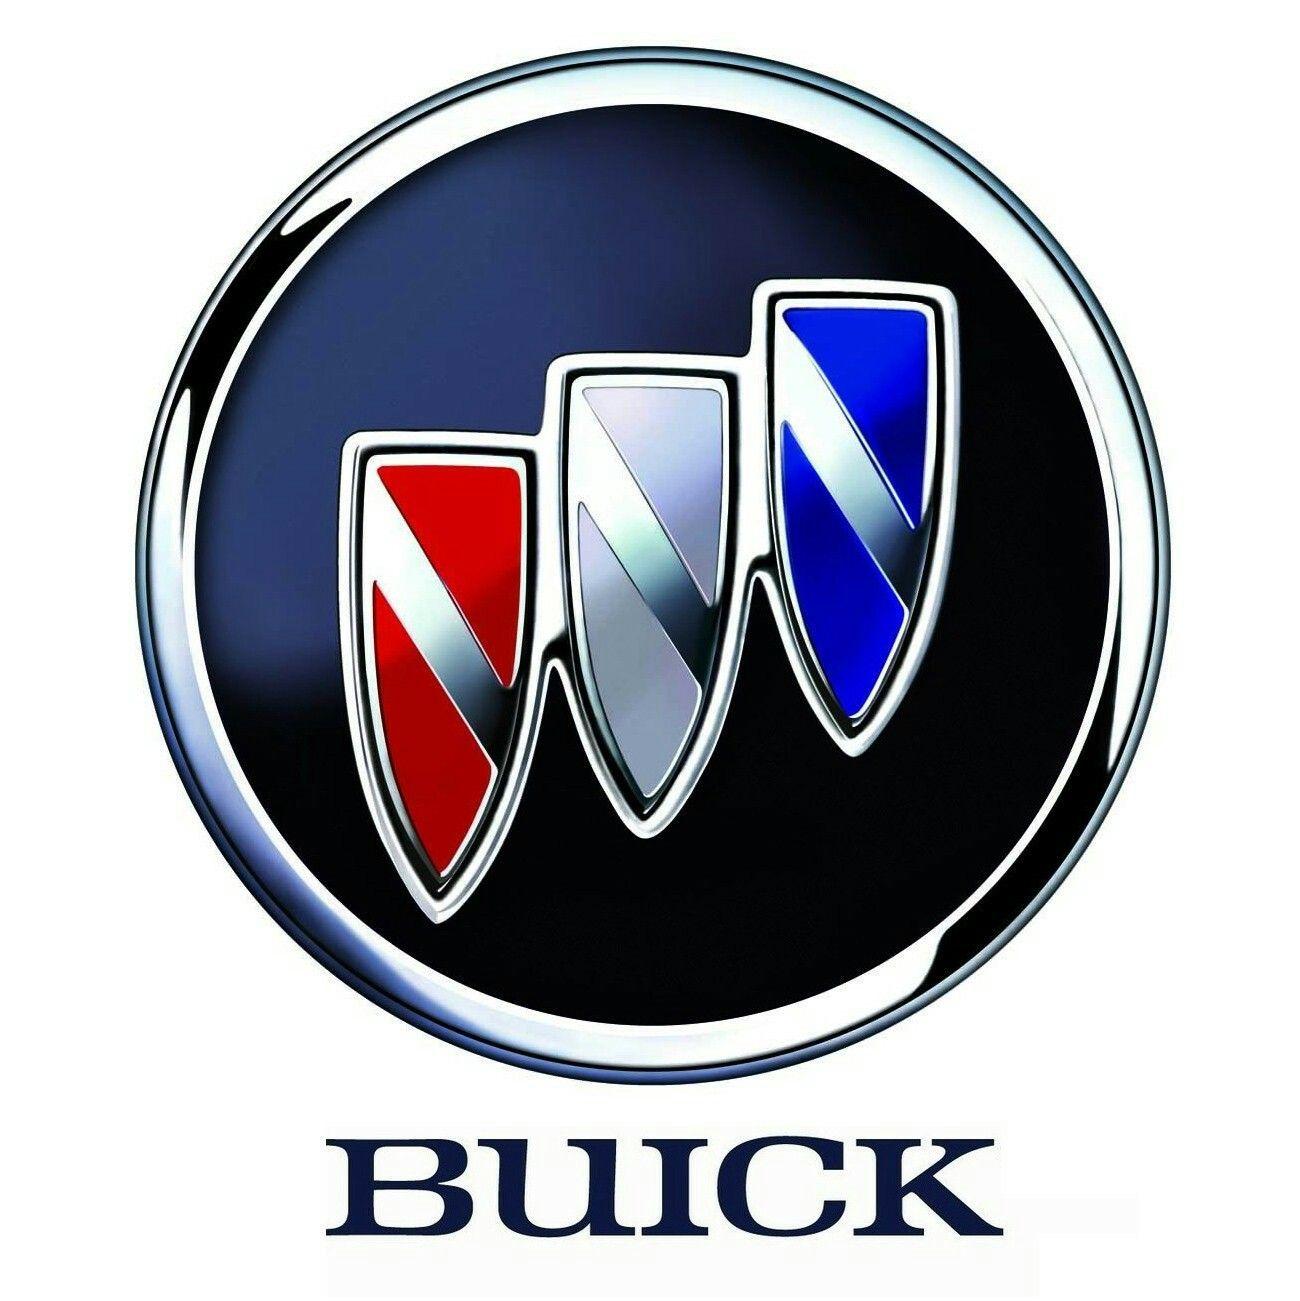 Buik Logo - Buick Logo, Buick Car Symbol Meaning and History. Car Brand